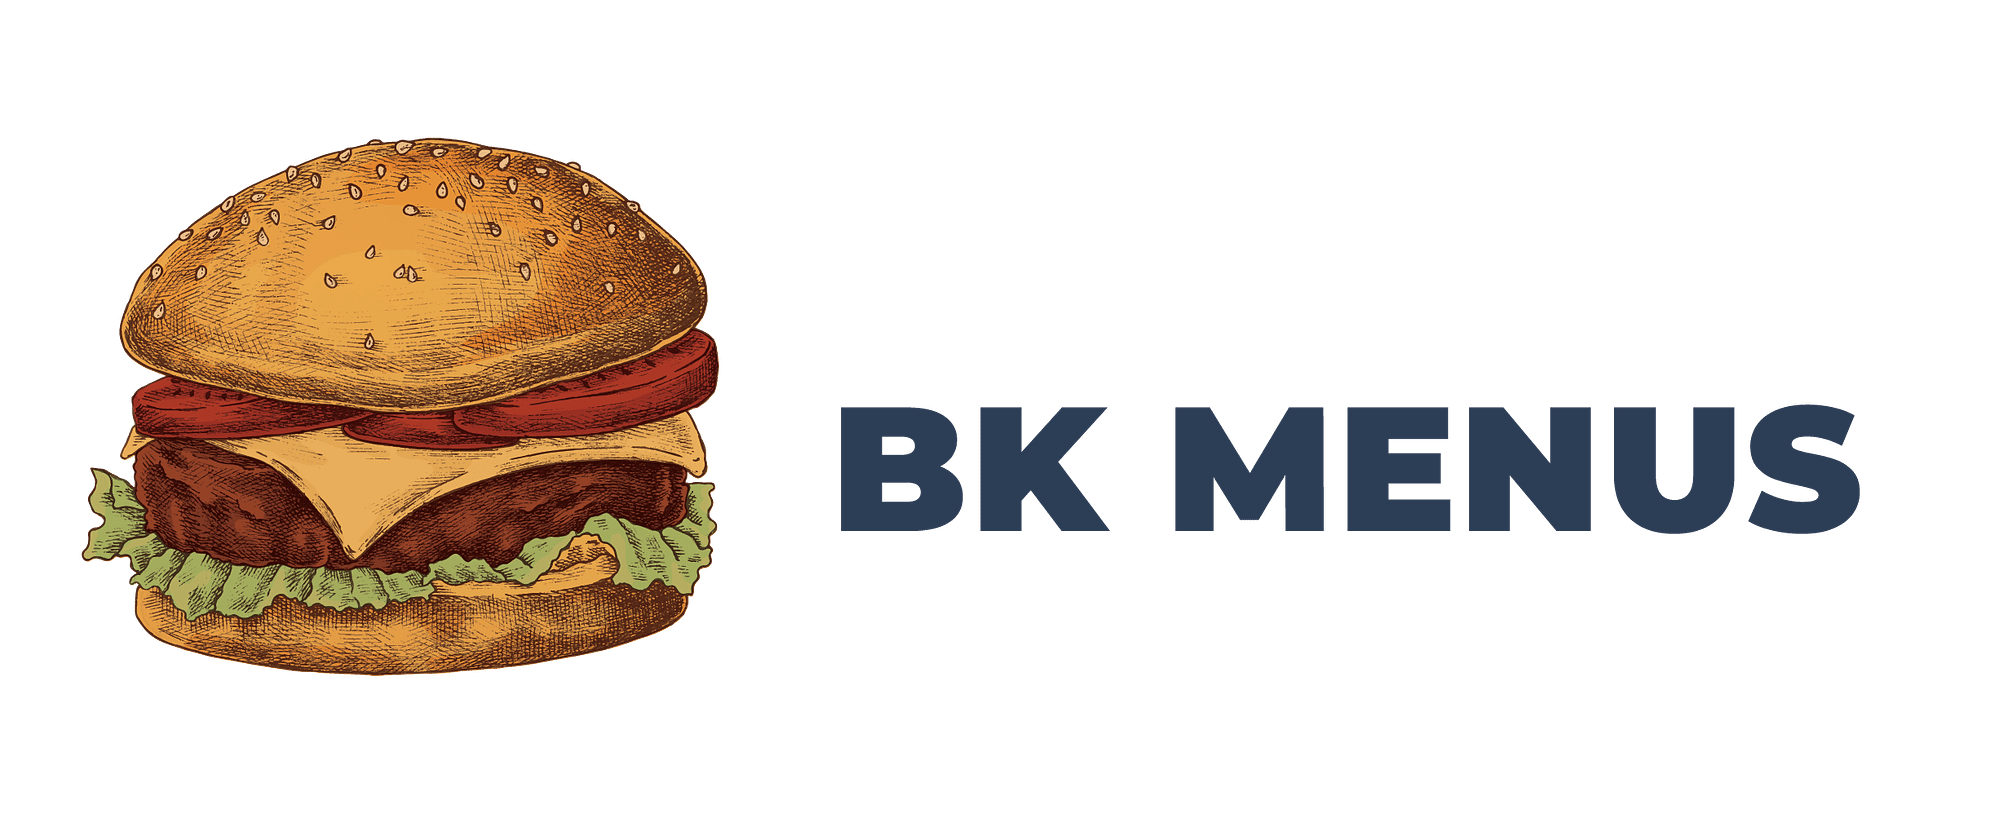 Burger king menus